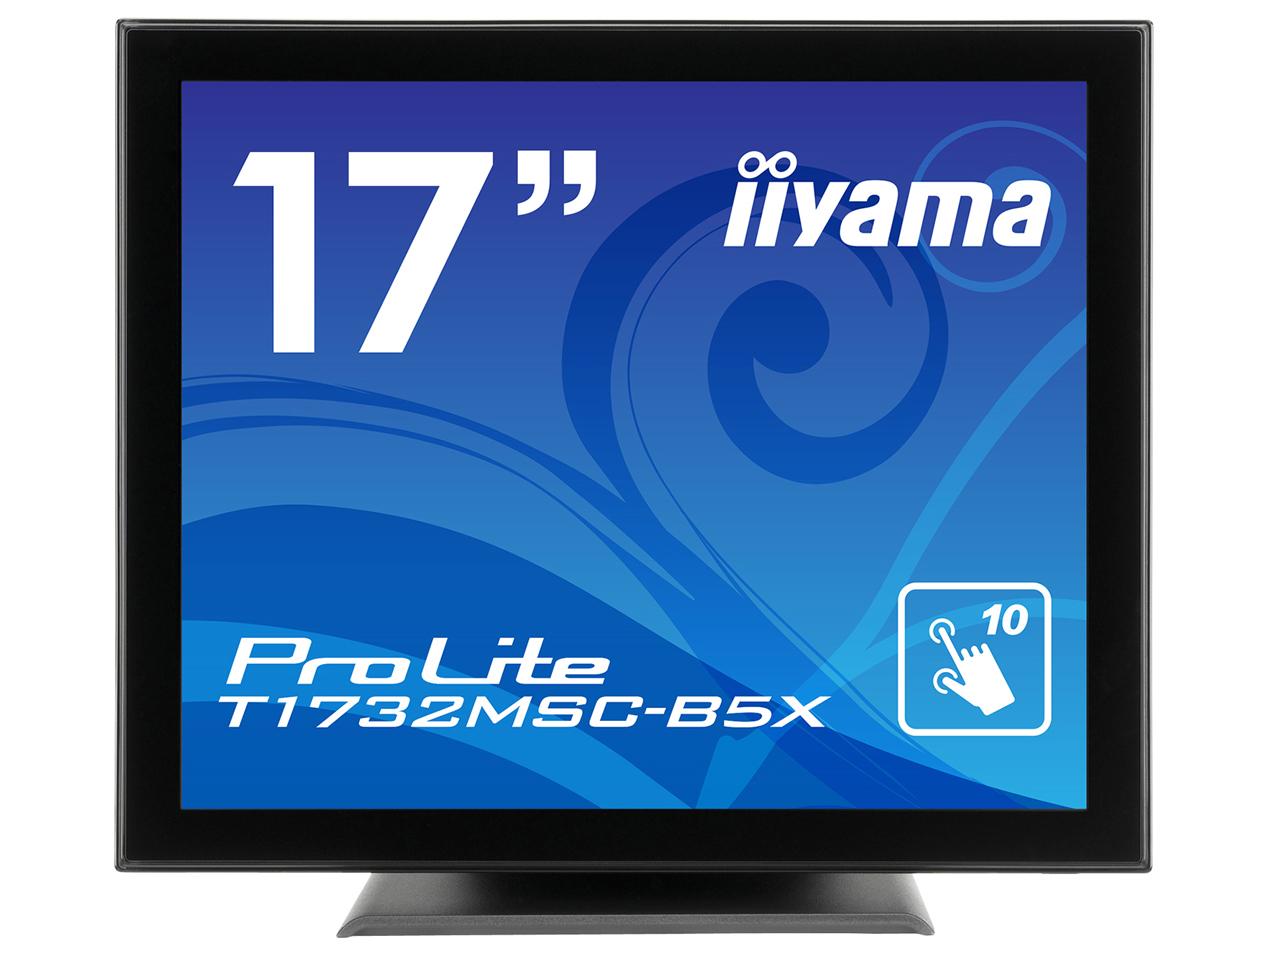 ProLite 17^ fBXvC A`OA Ódeʕ HDMI DisplayPort ho hH IP54(T1732MSC-B5X) IIYAMA CC}